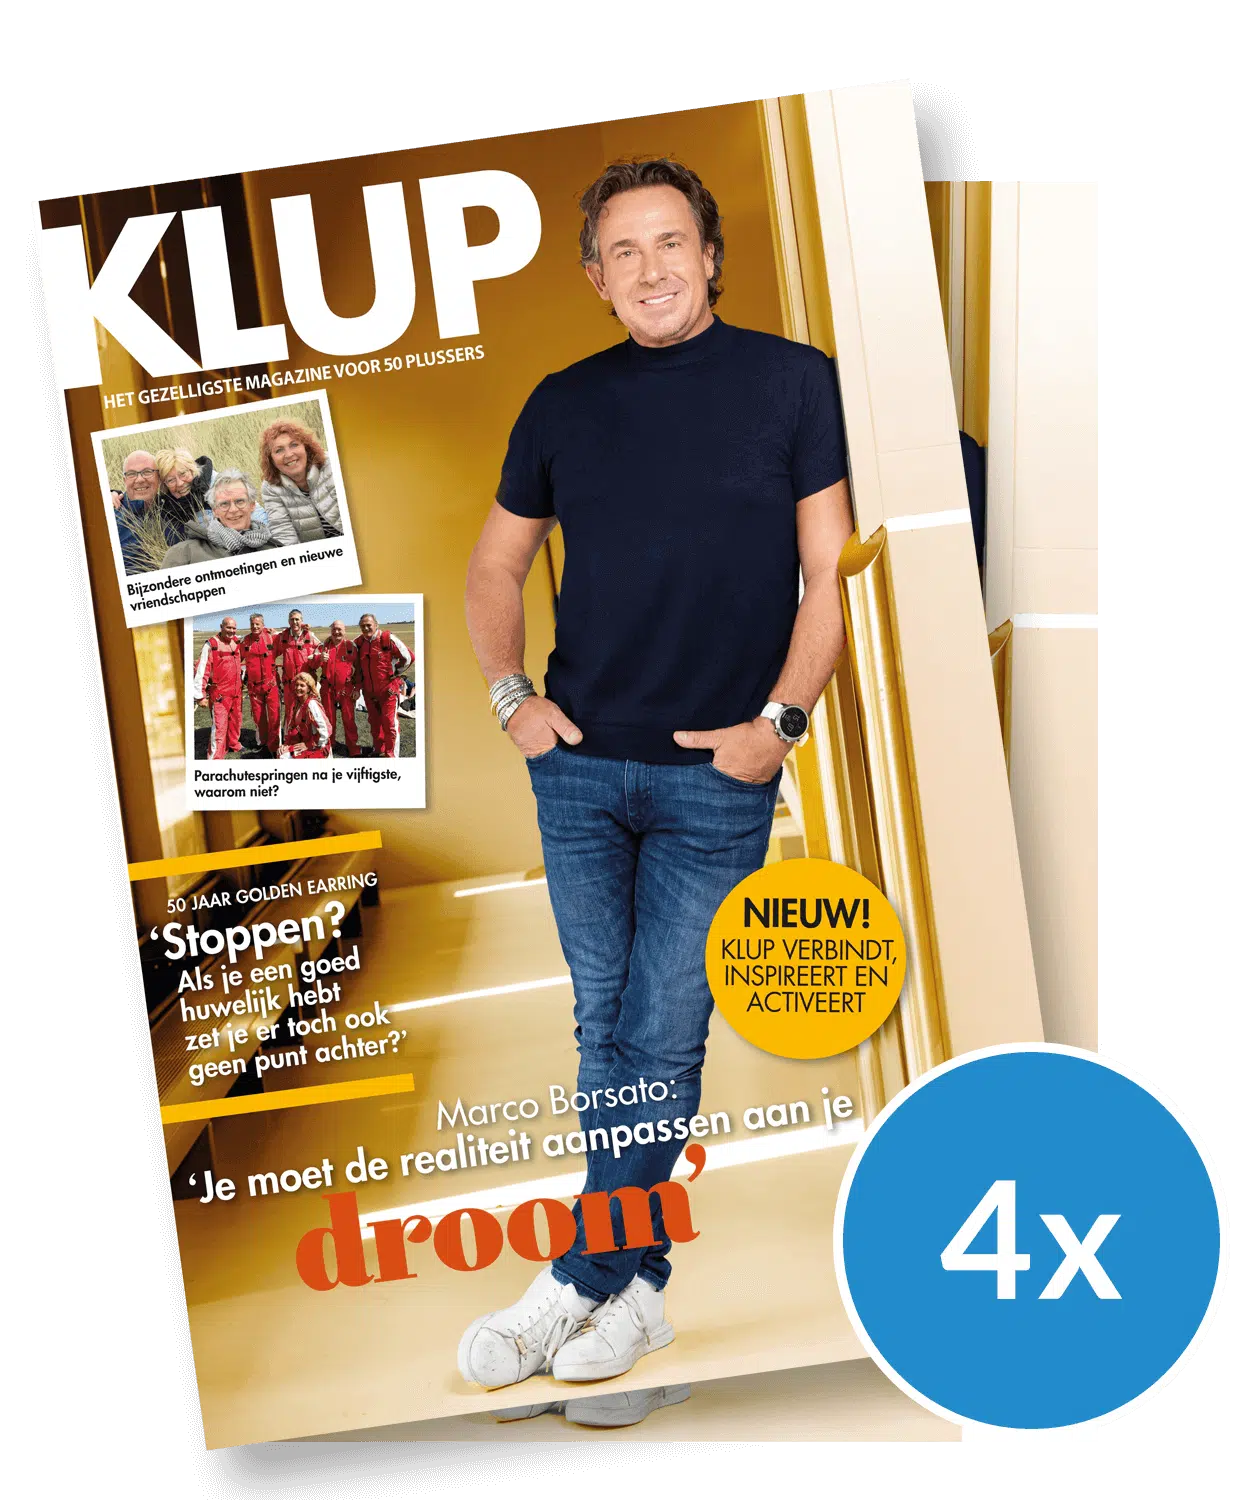 Klup magazine